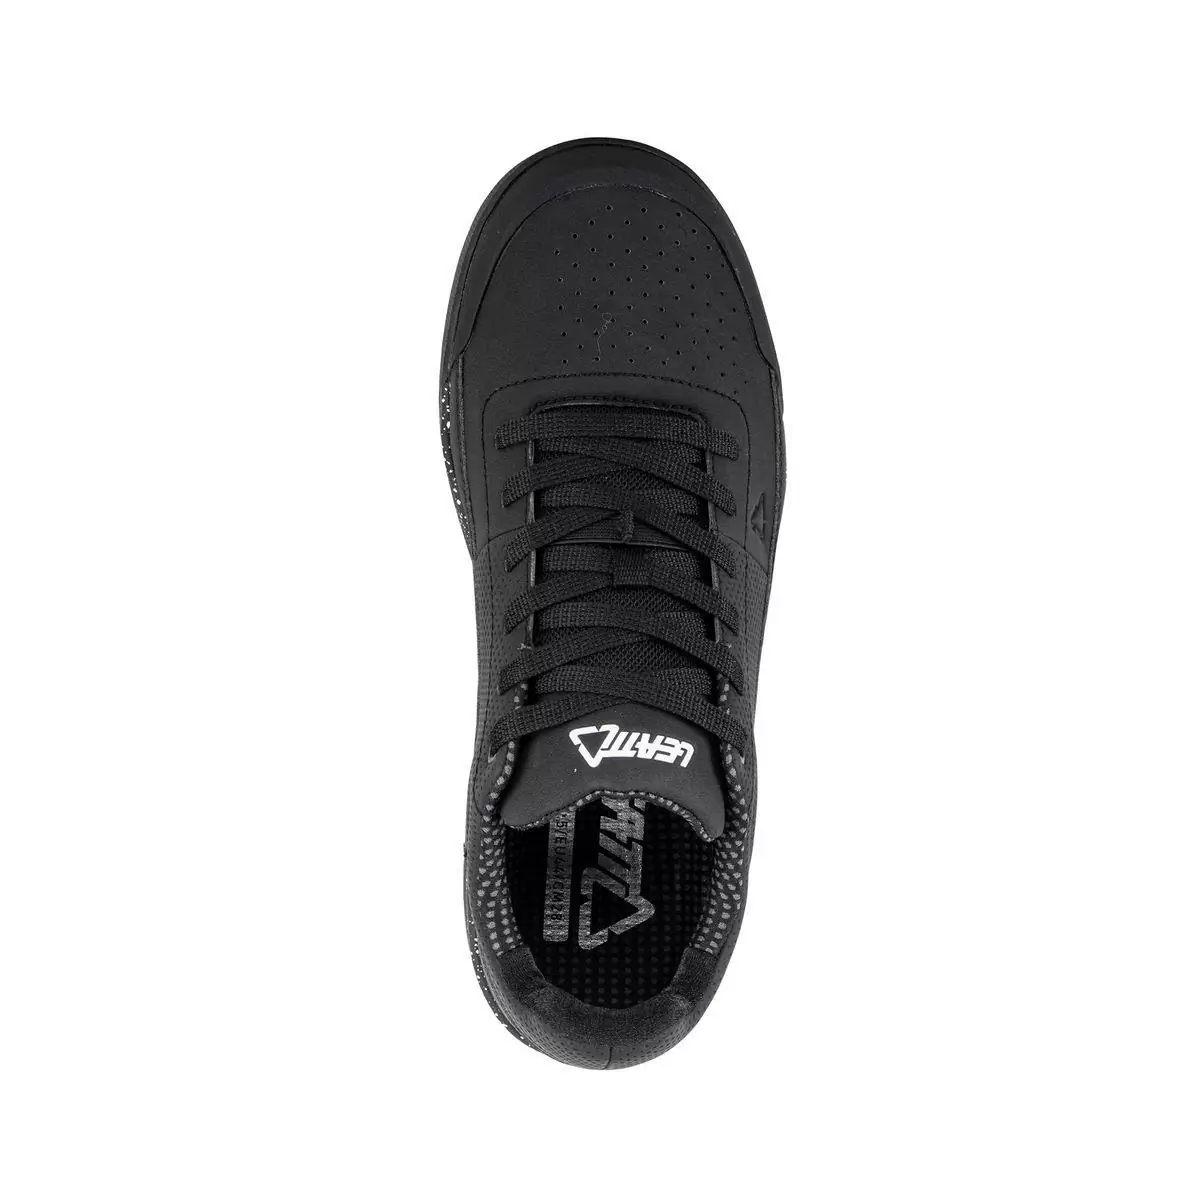 Mtb Shoes 2.0 Flat Black Size 43.5 #2